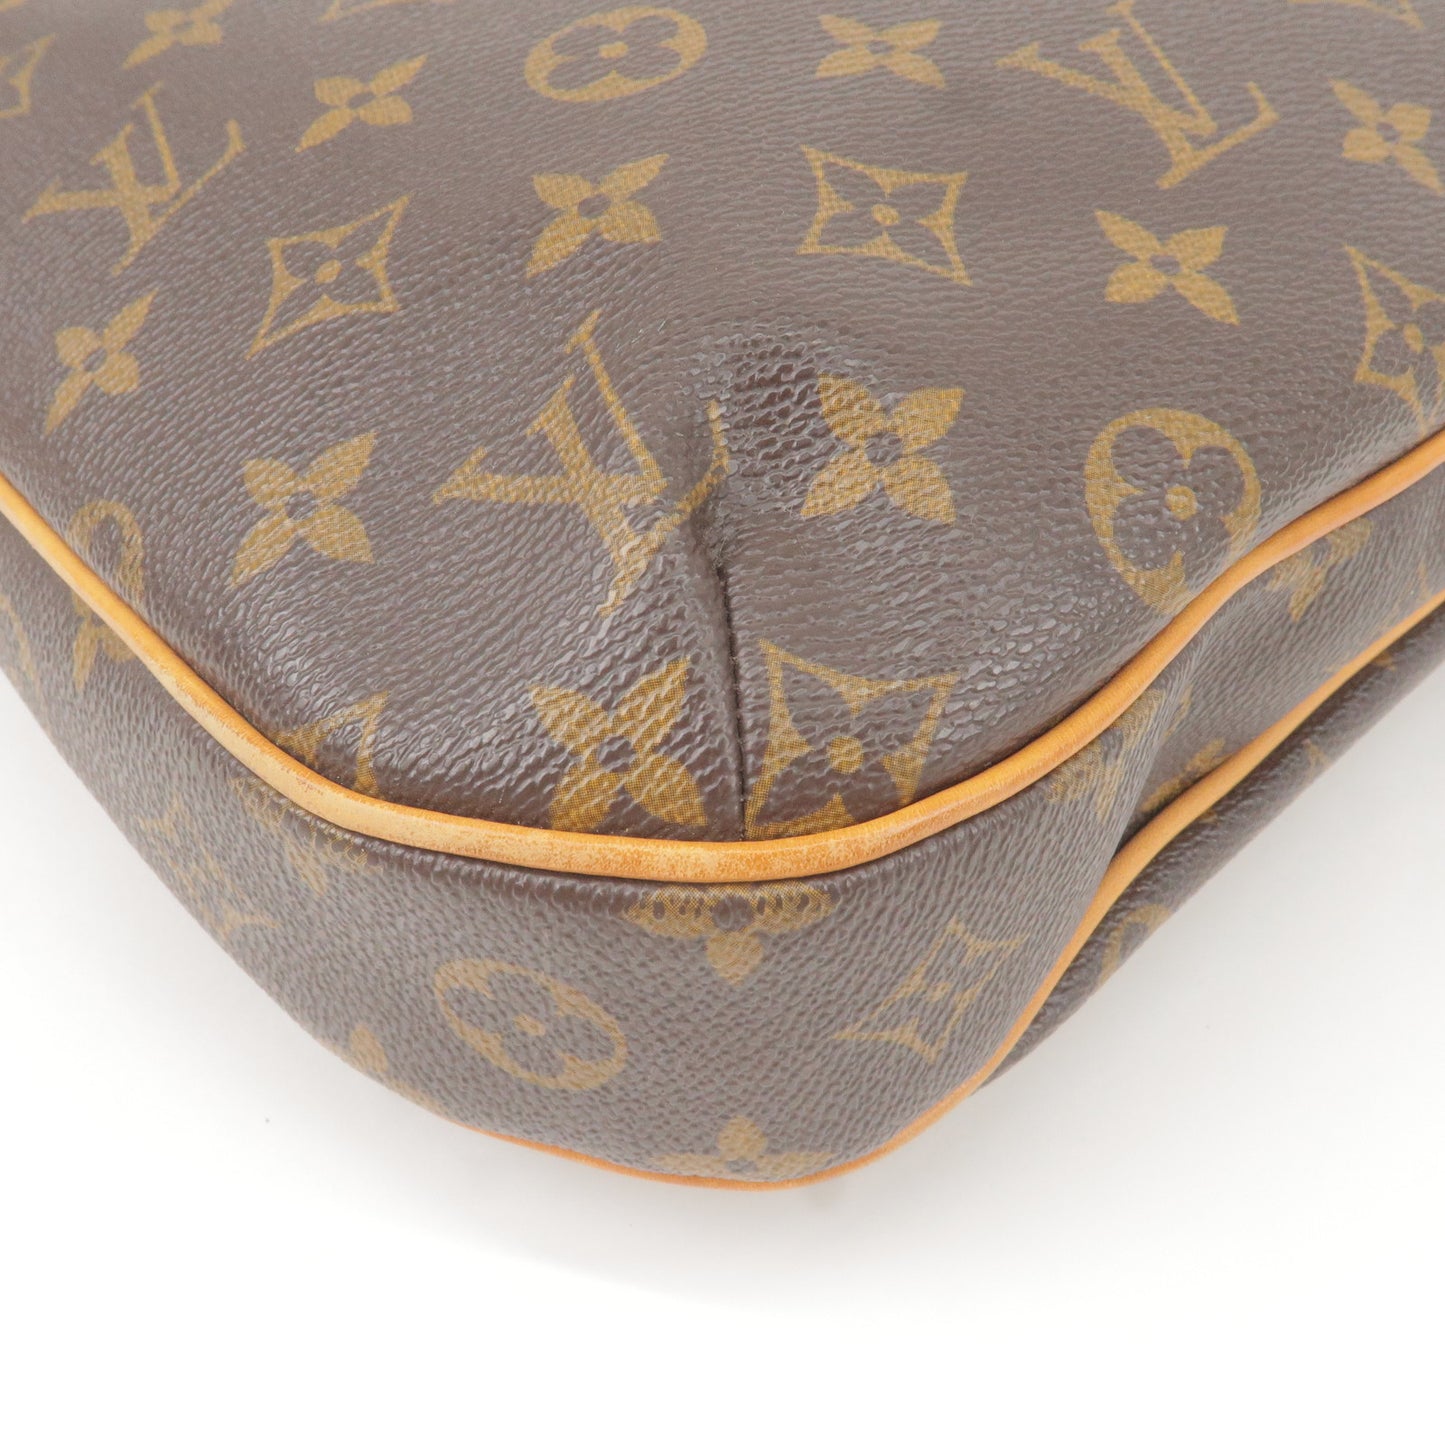 Louis Vuitton Monogram Odeon MM Shoulder Bag M56389